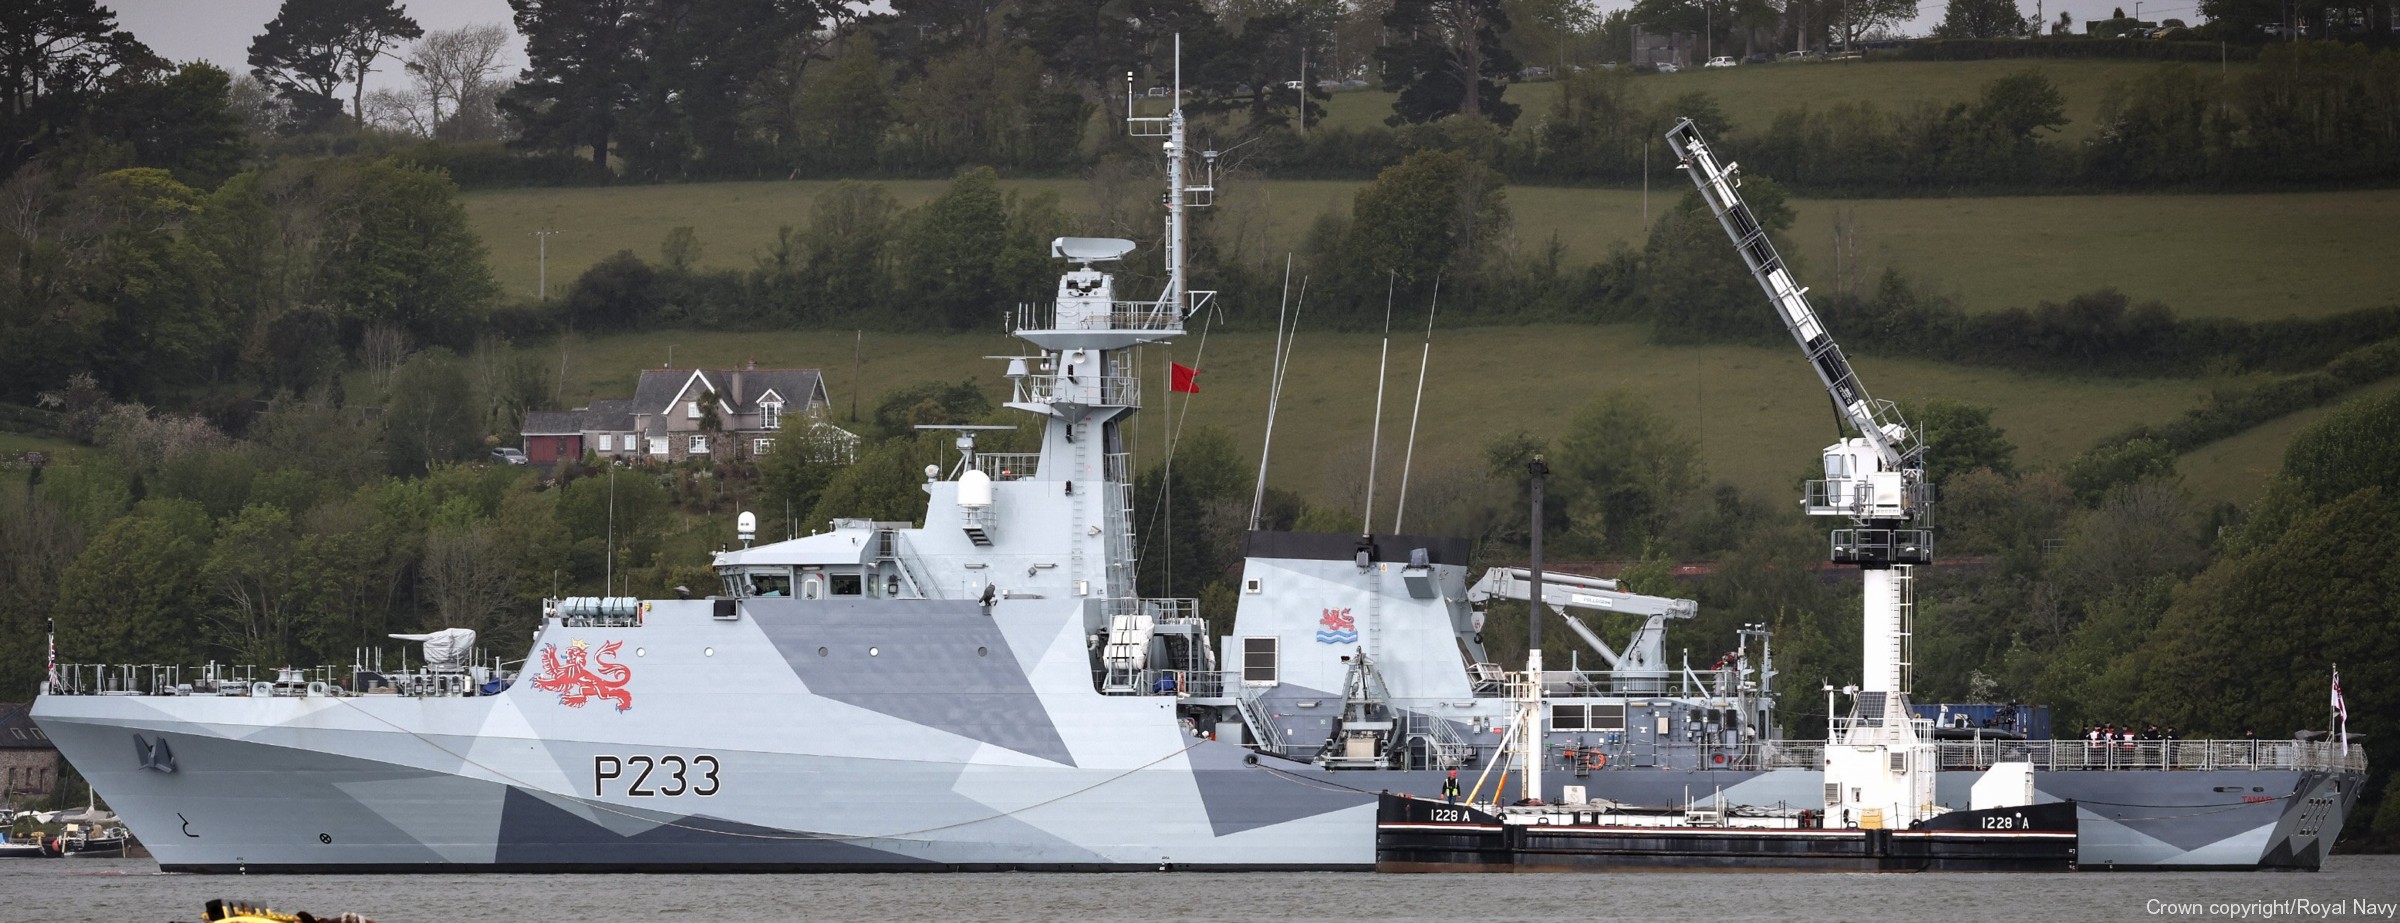 p233 hms tamar river class offshore patrol vessel opv royal navy 57